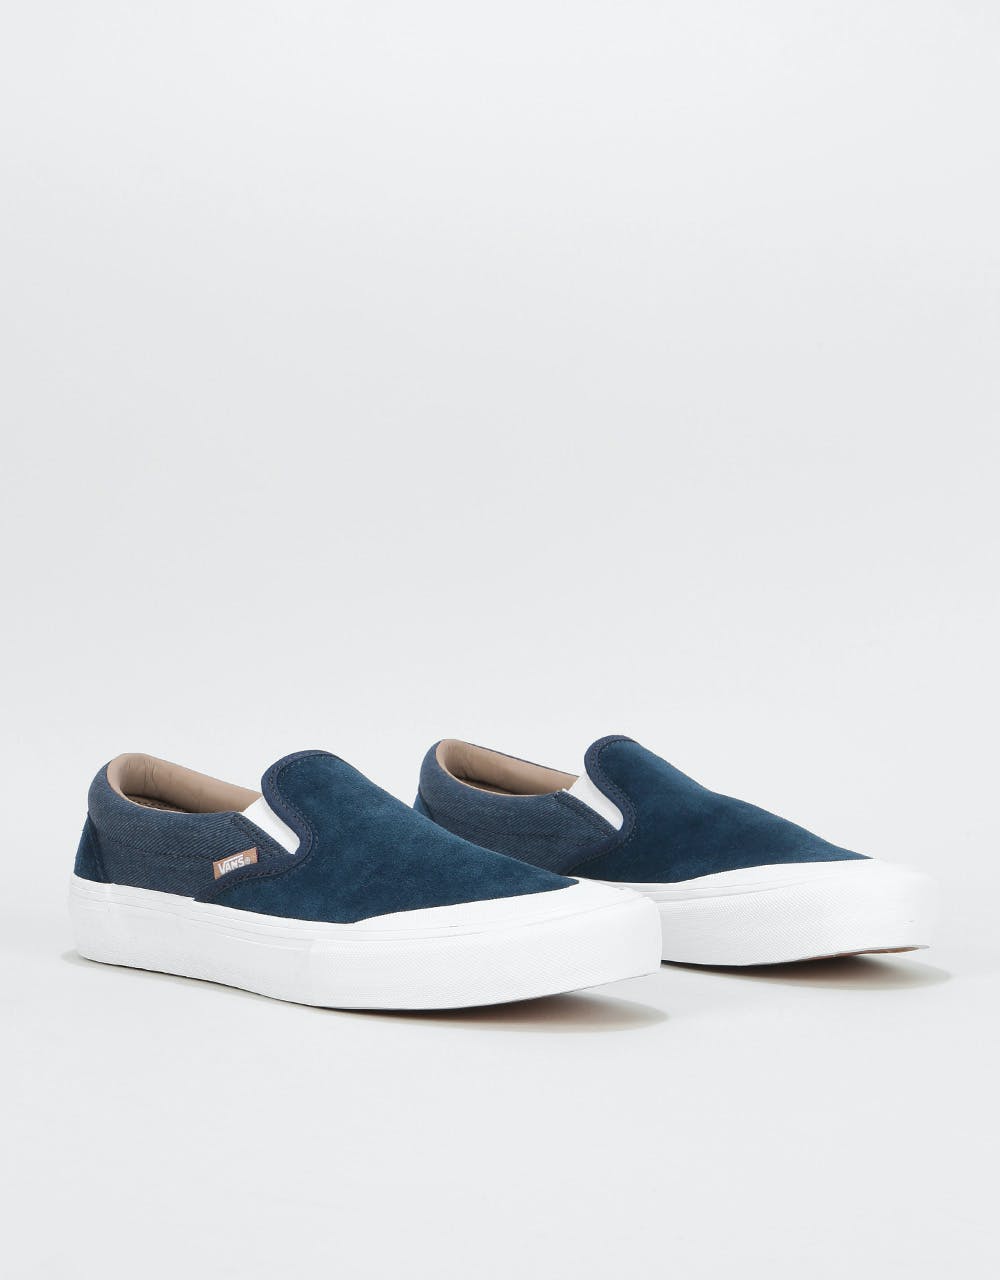 Vans Slip-On Pro Skate Shoes - (Twill) Dress Blues/Portabella